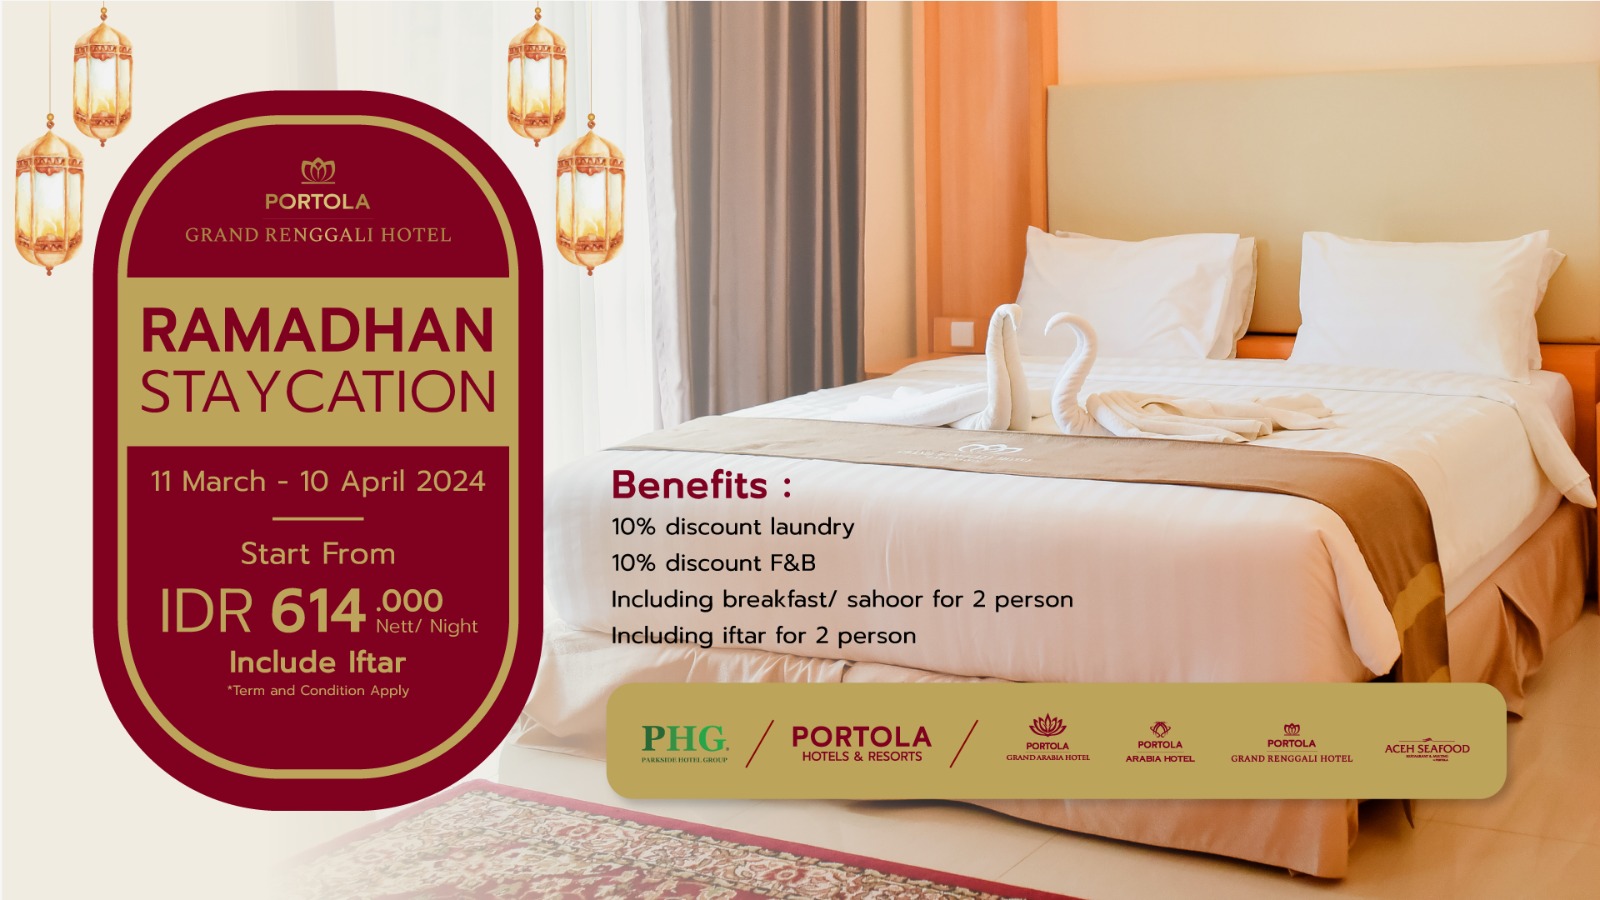 Portola Grand Renggali Hotel: Rayakan Ramadhan dengan Promo "Ramadhan Staycation"!